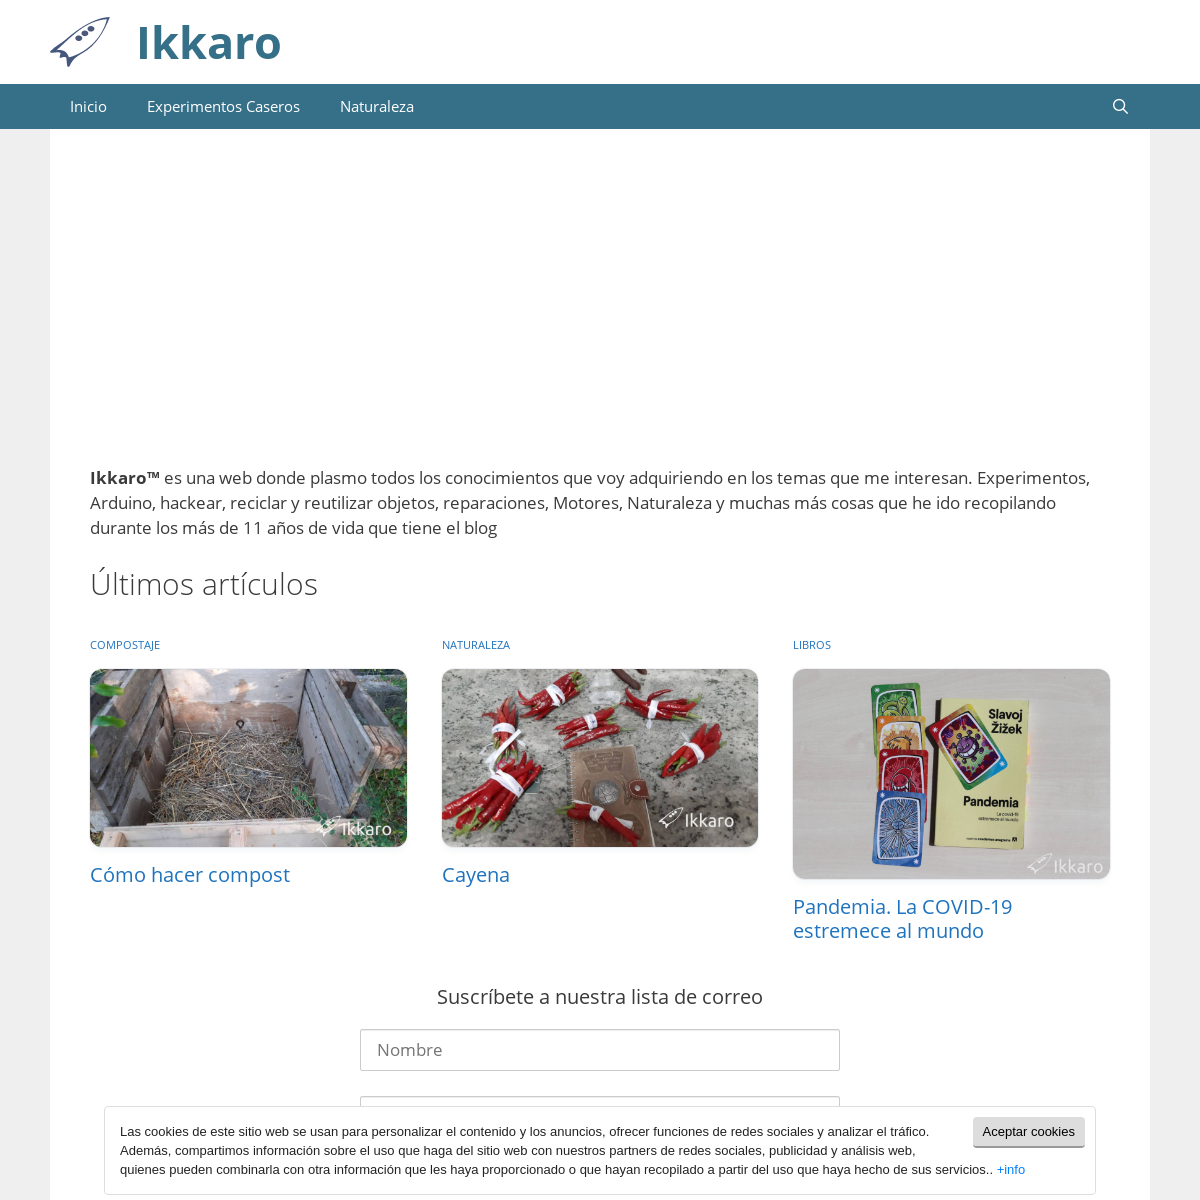 A complete backup of ikkaro.com